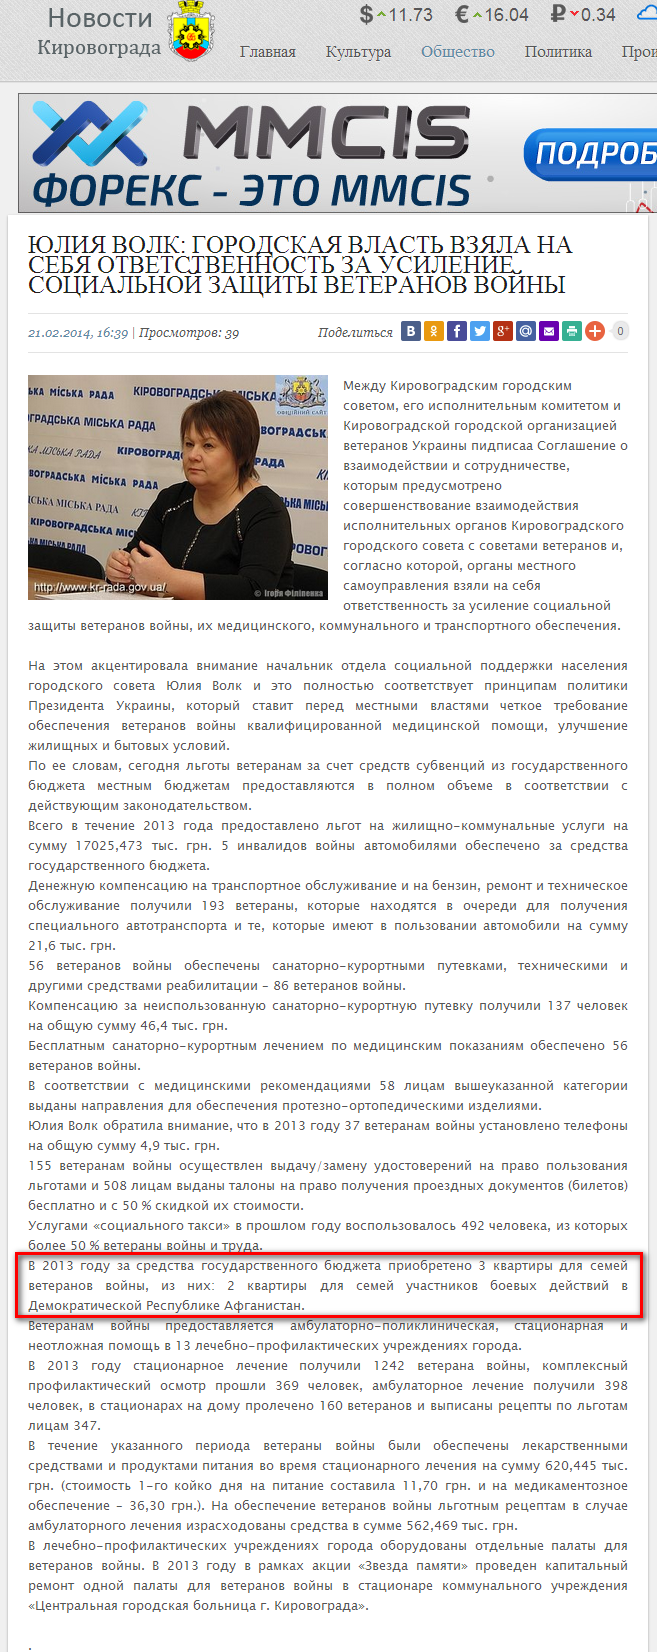 http://topnews.kr.ua/society/2014/02/21/16584.html